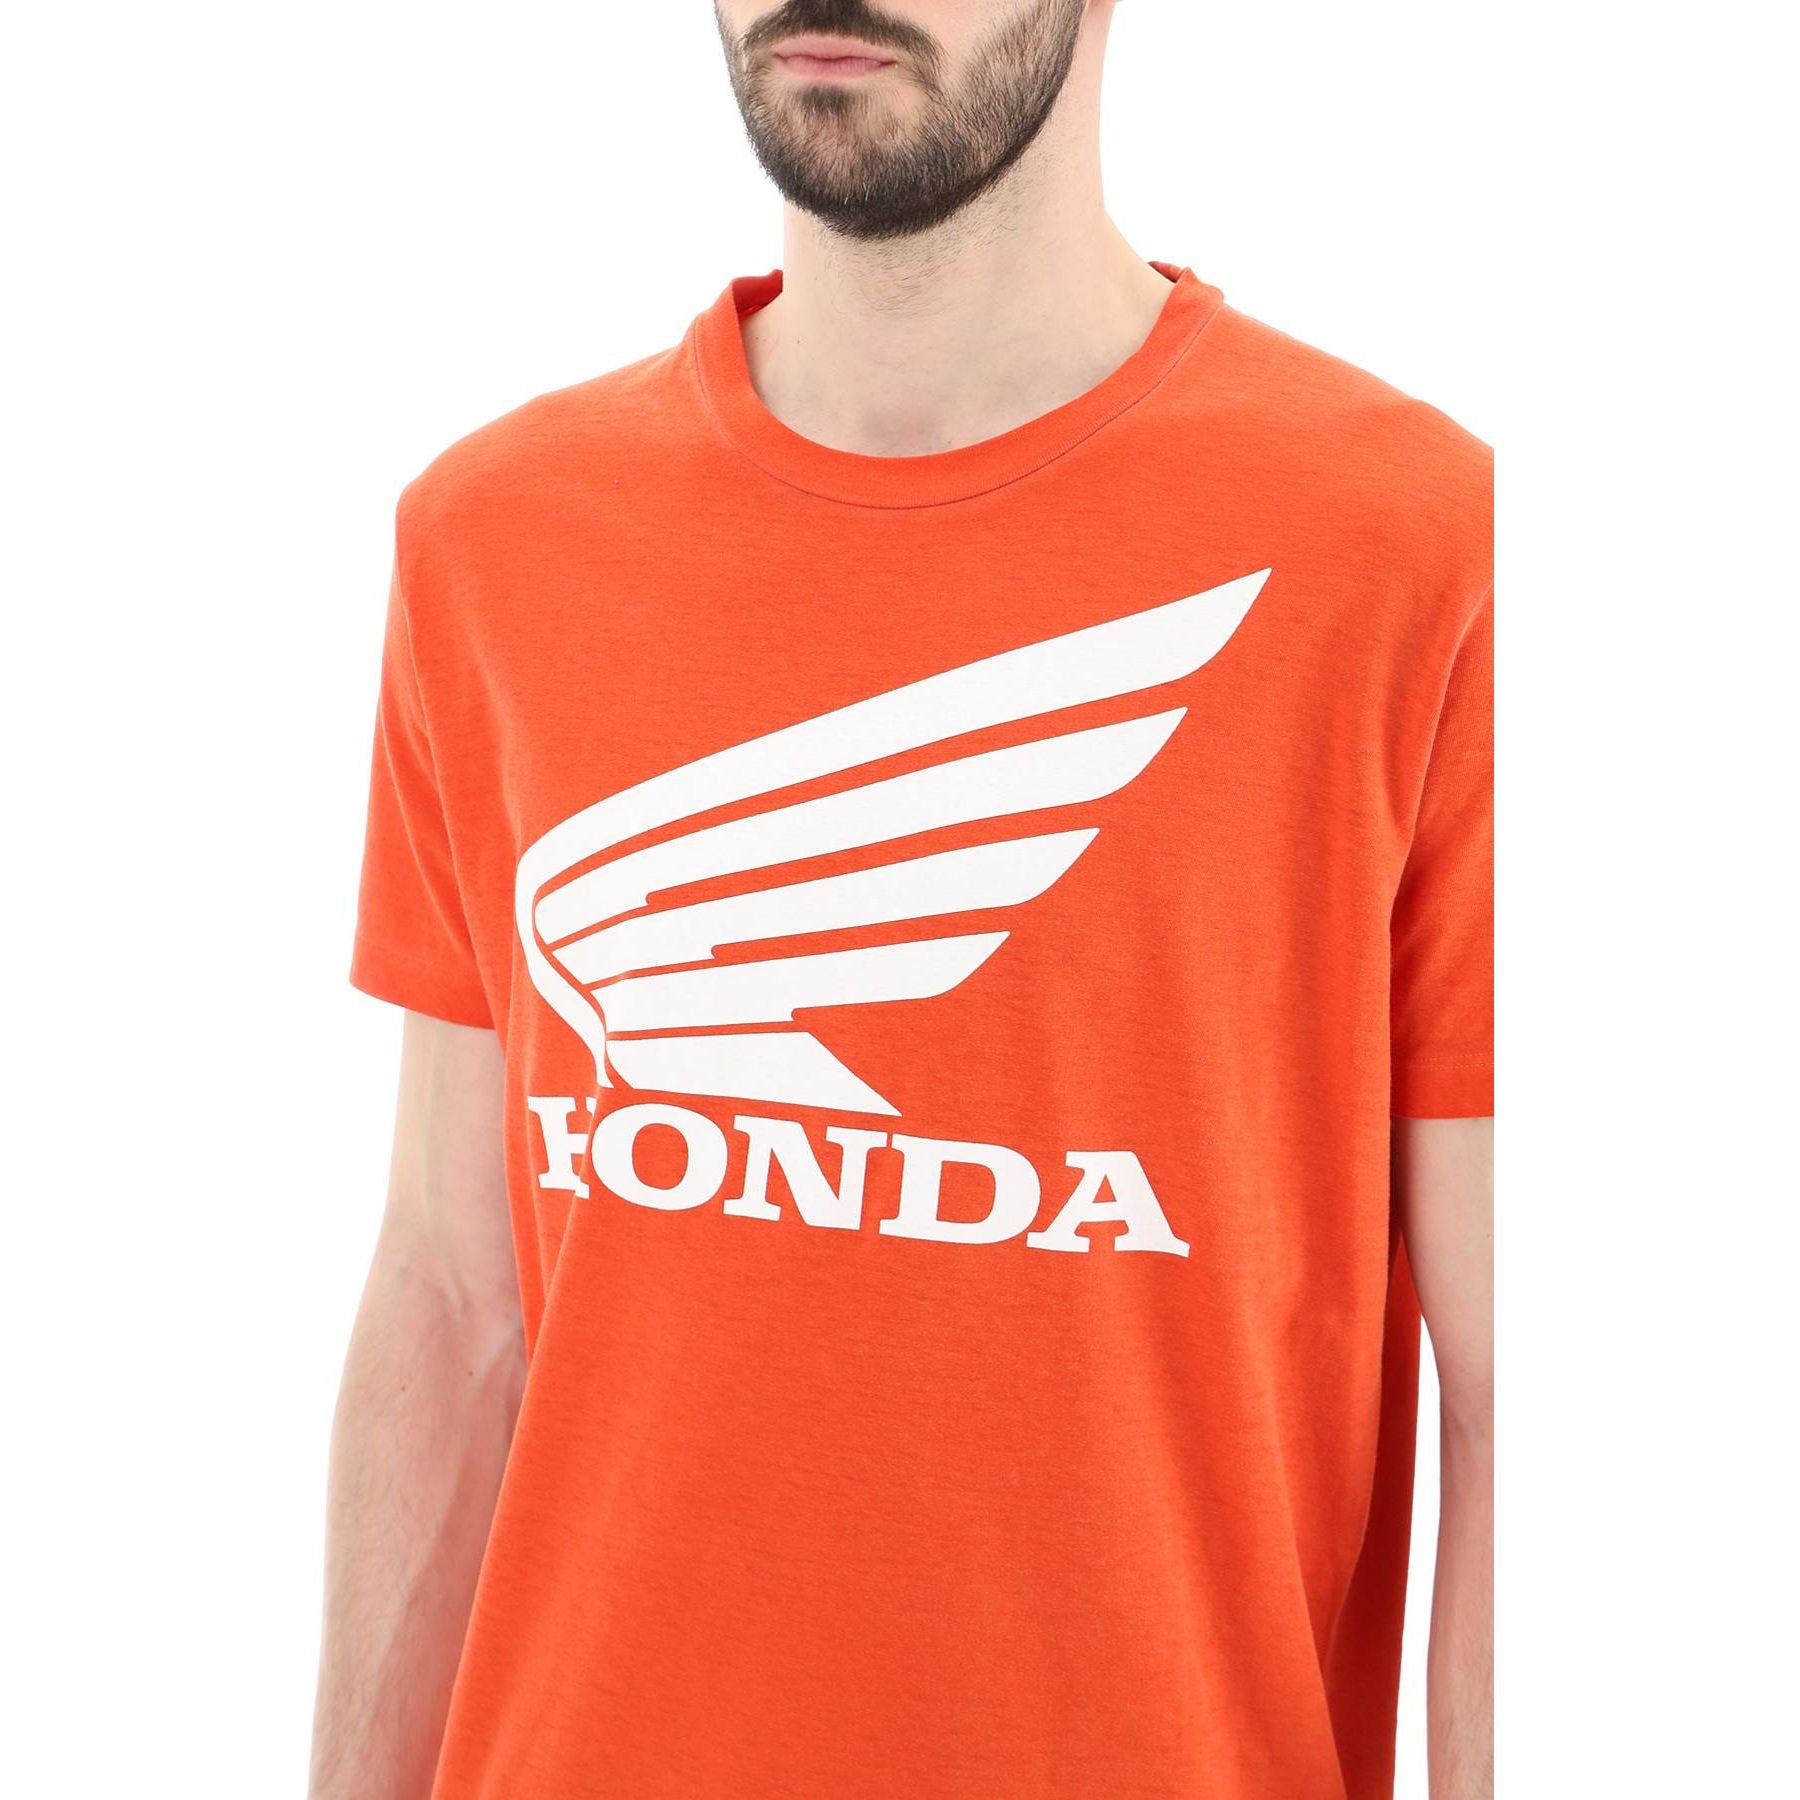 Honda' Cotton T-Shirt